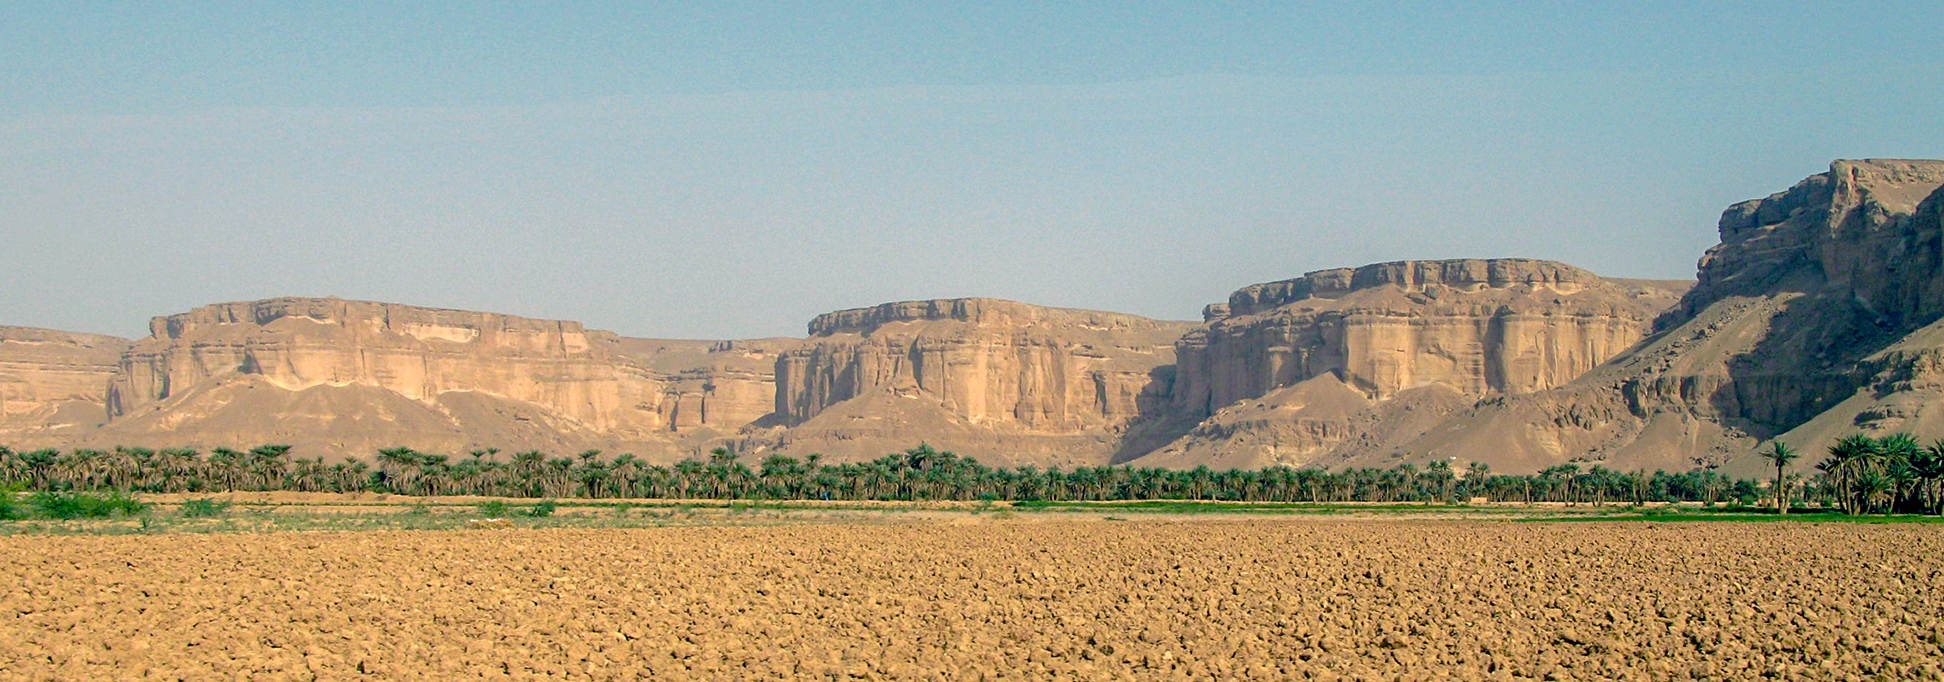 Escarpment and fertile soil in Wadi Hadhramaut